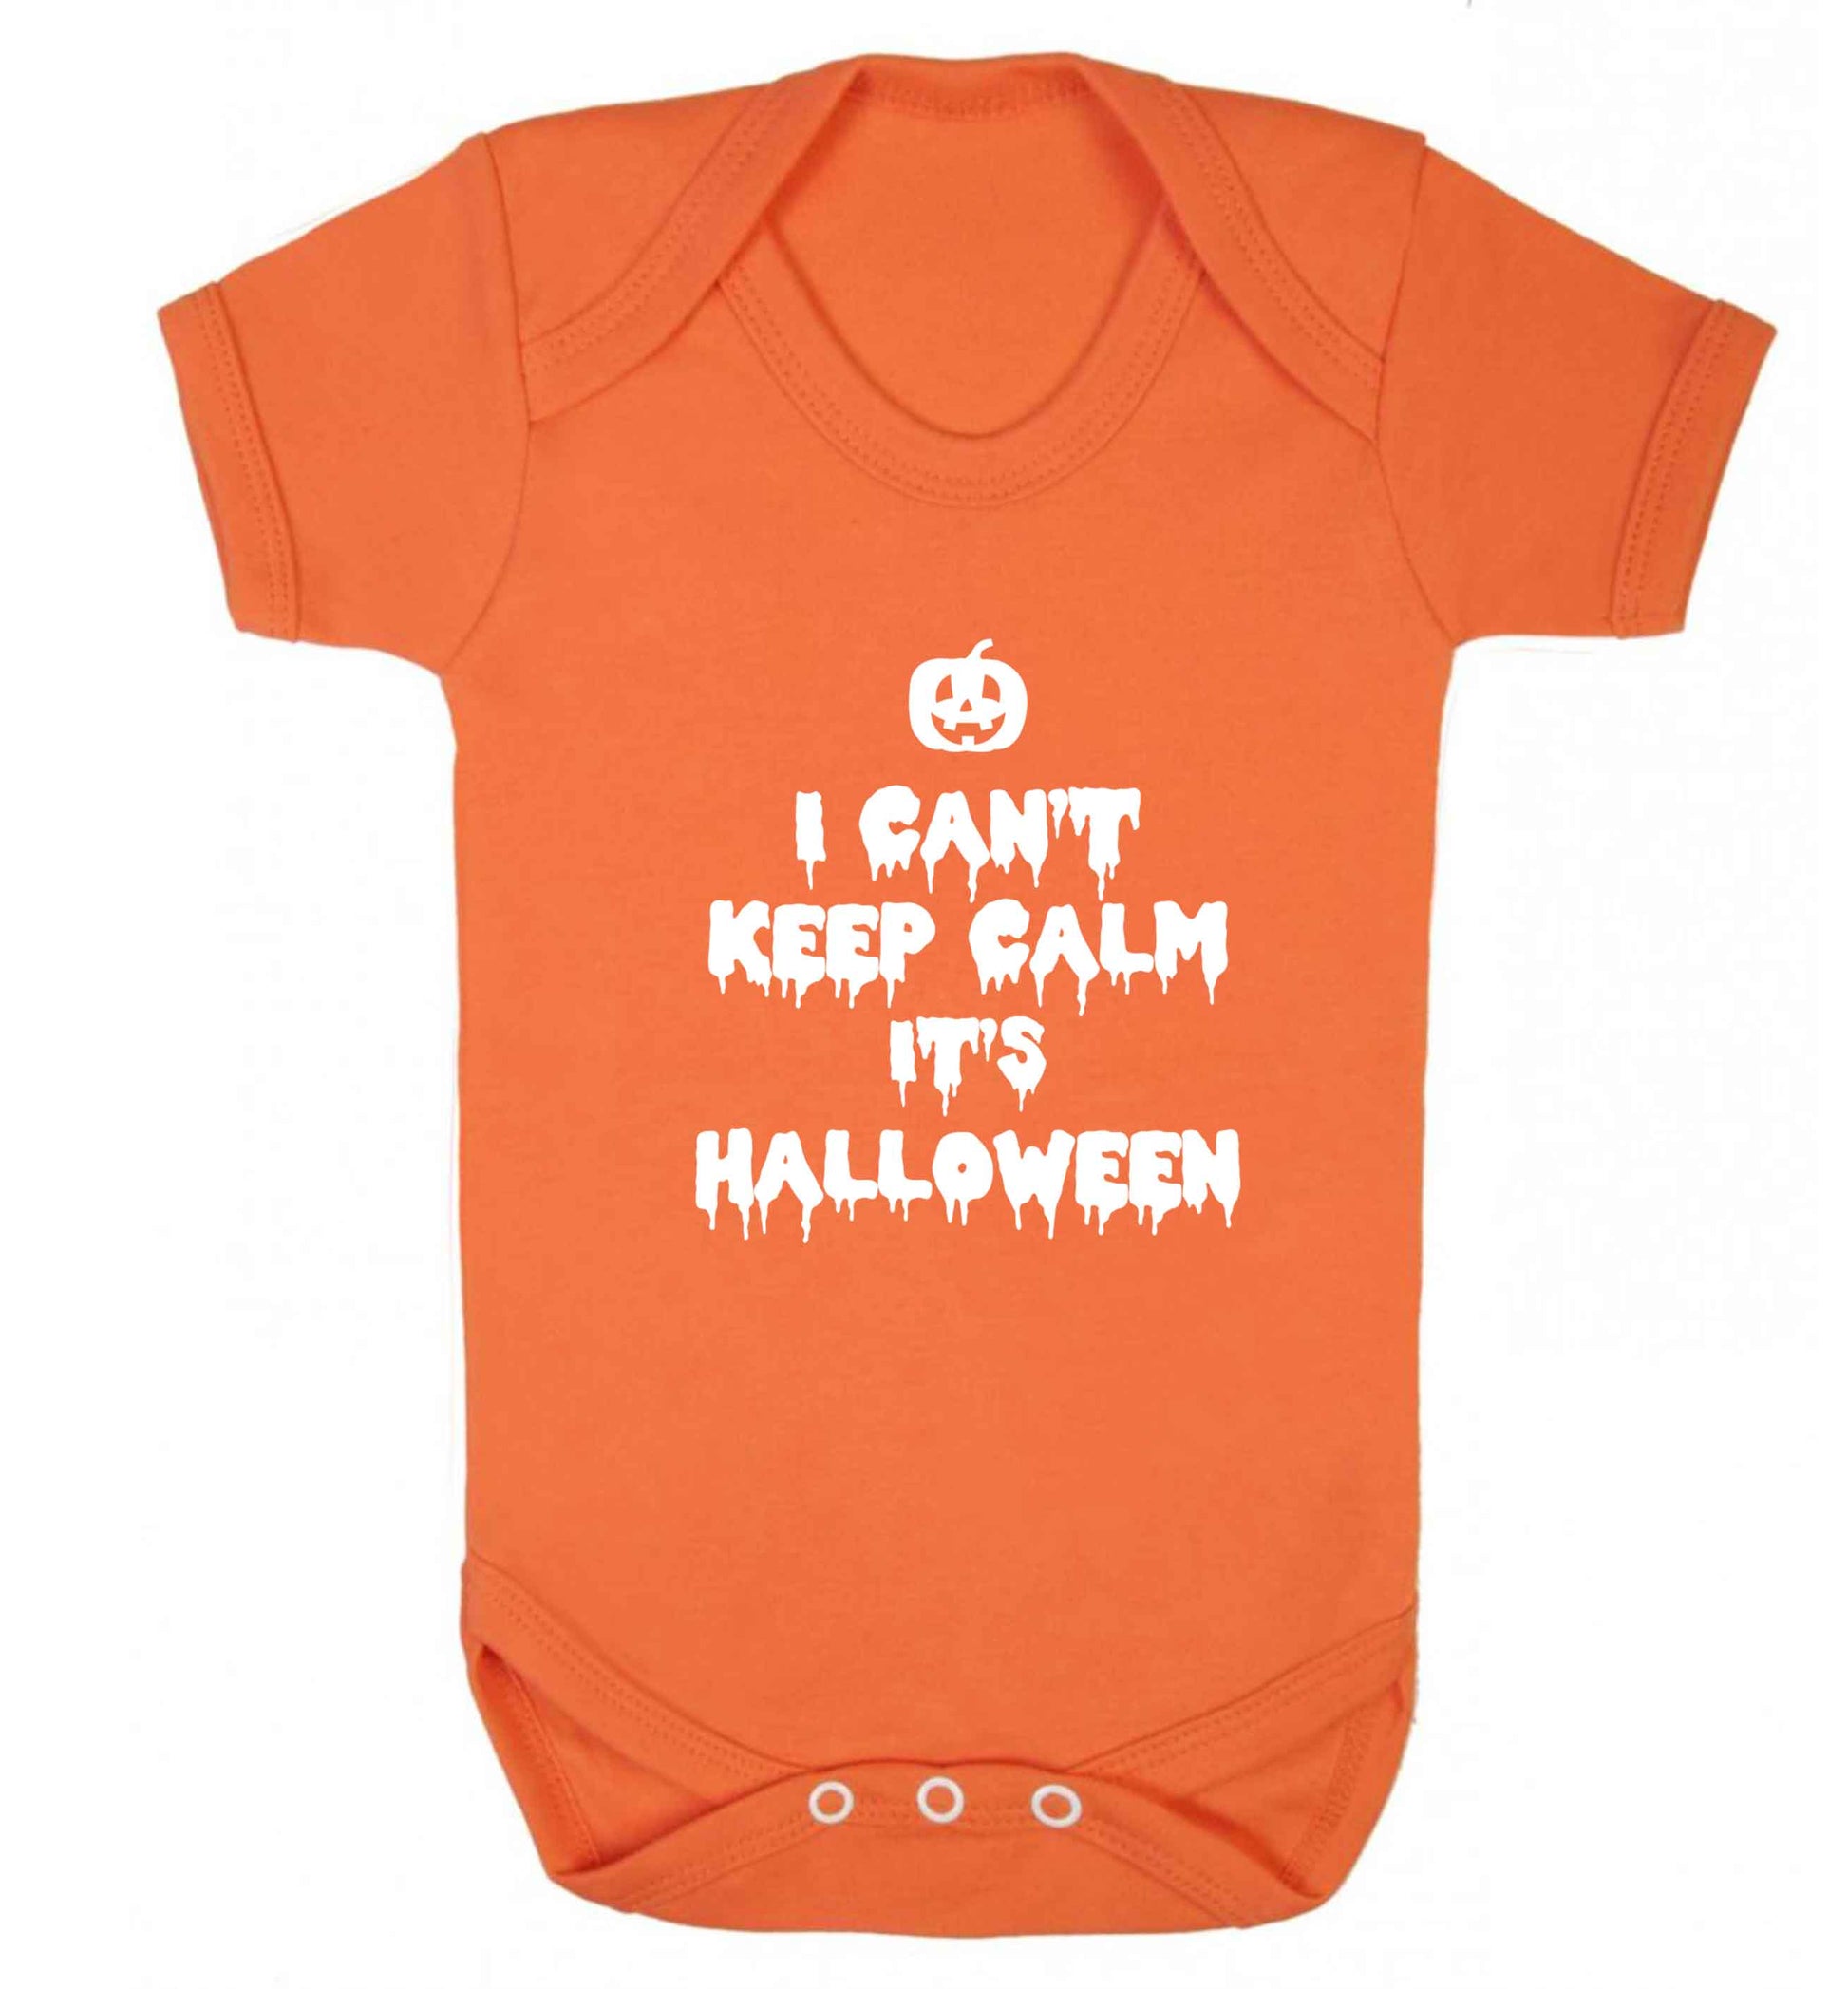 I can't keep calm it's halloween baby vest orange 18-24 months